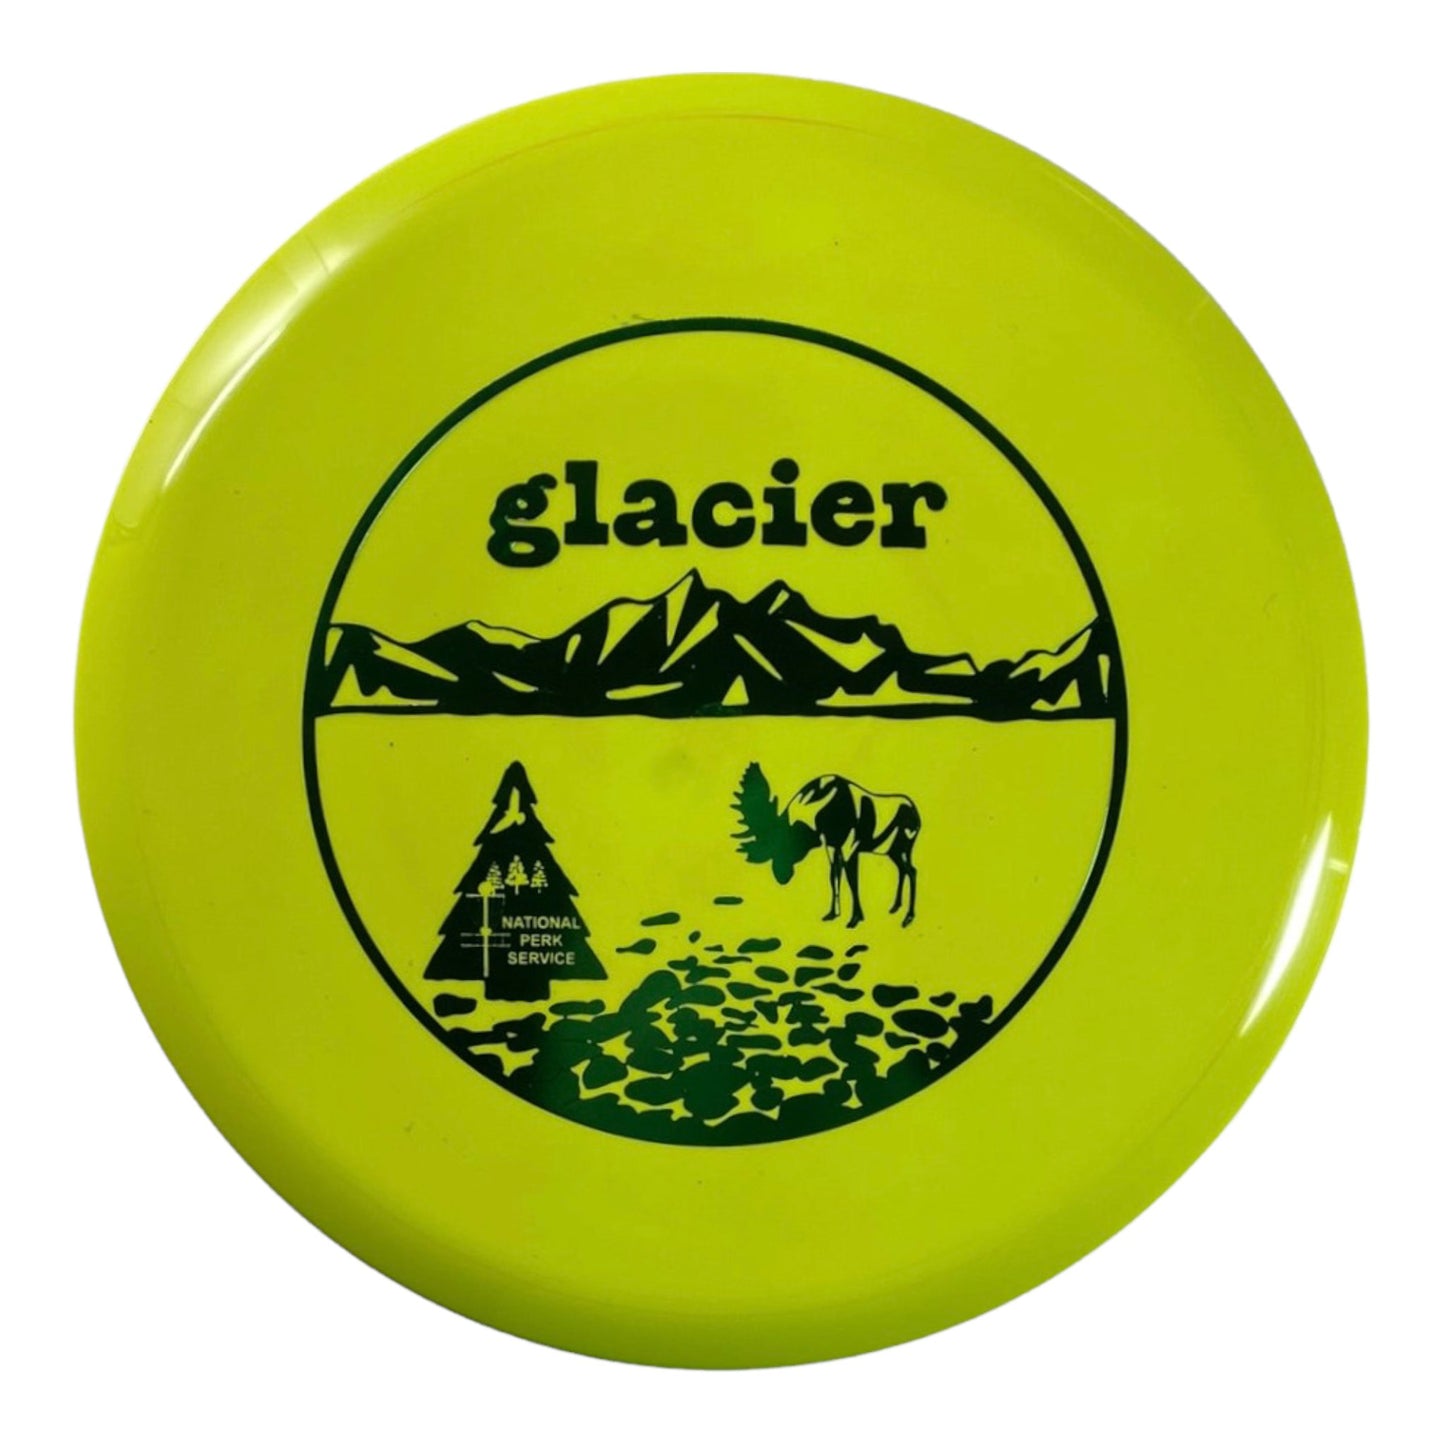 Innova Champion Discs Glacier - Roc3 | Star | Yellow/Green 173g (First Run) 24/50 Disc Golf